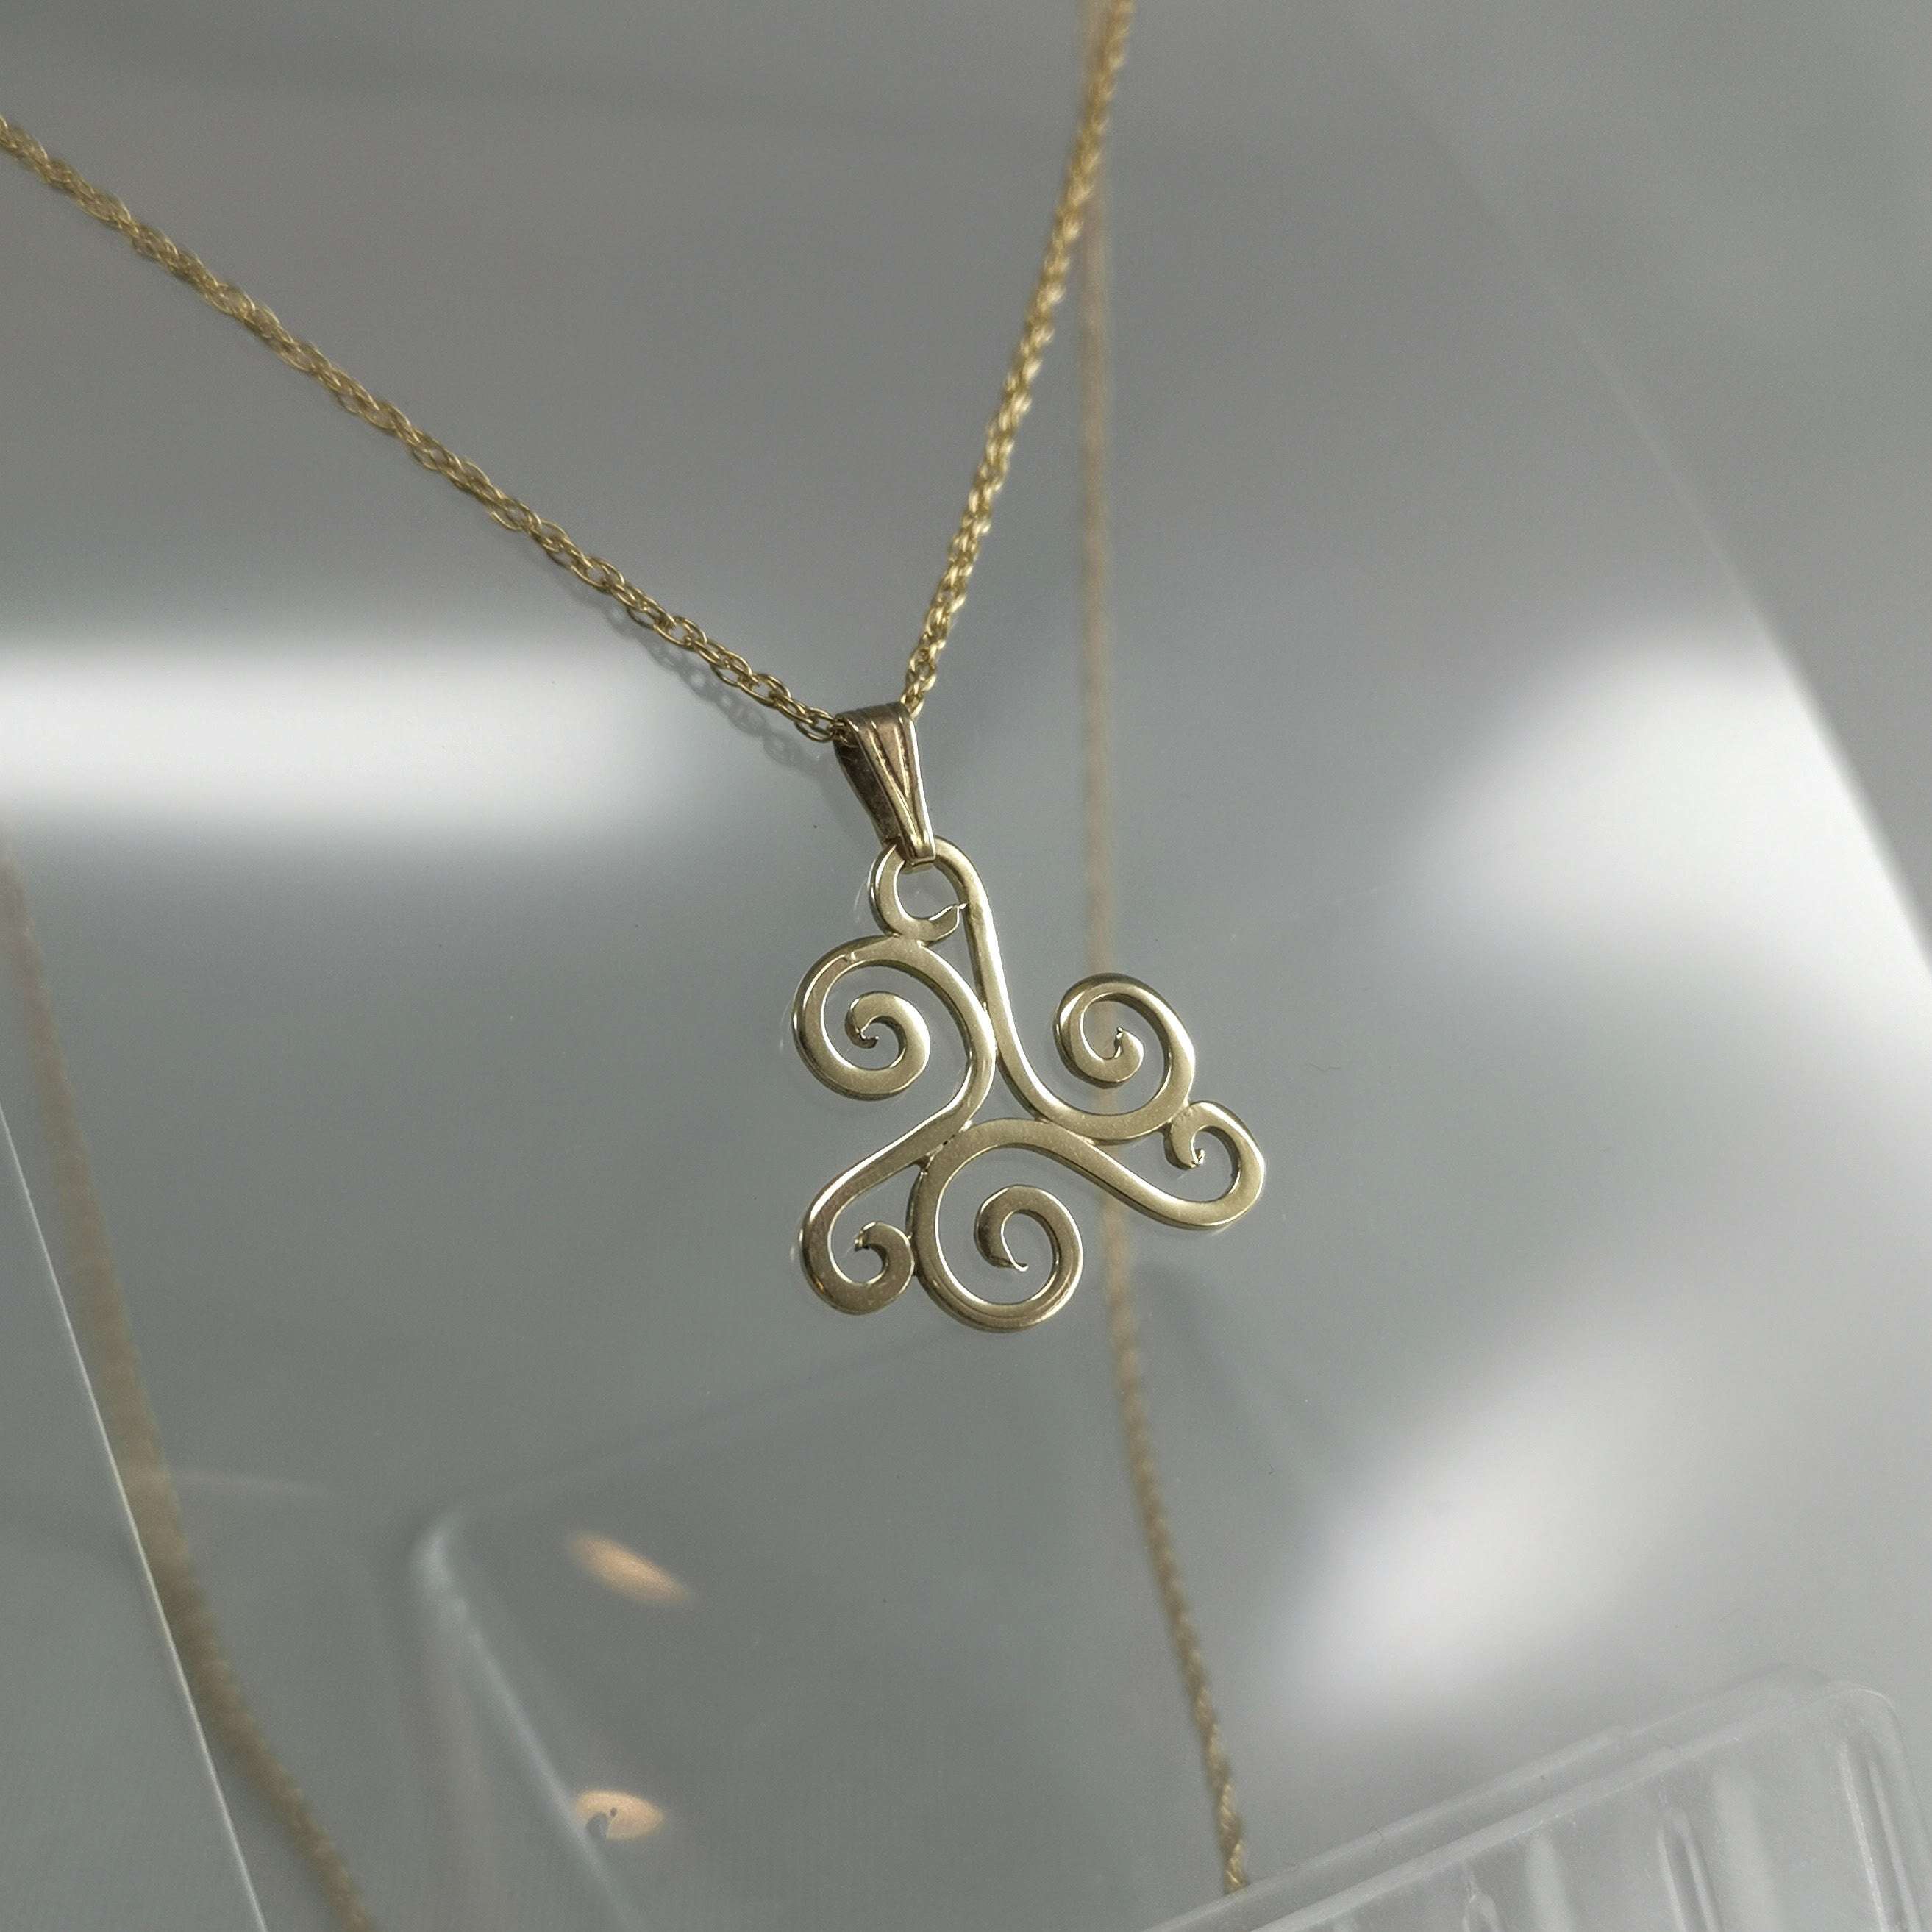 9ct Gold Irish triskele pendant on an 18" chain